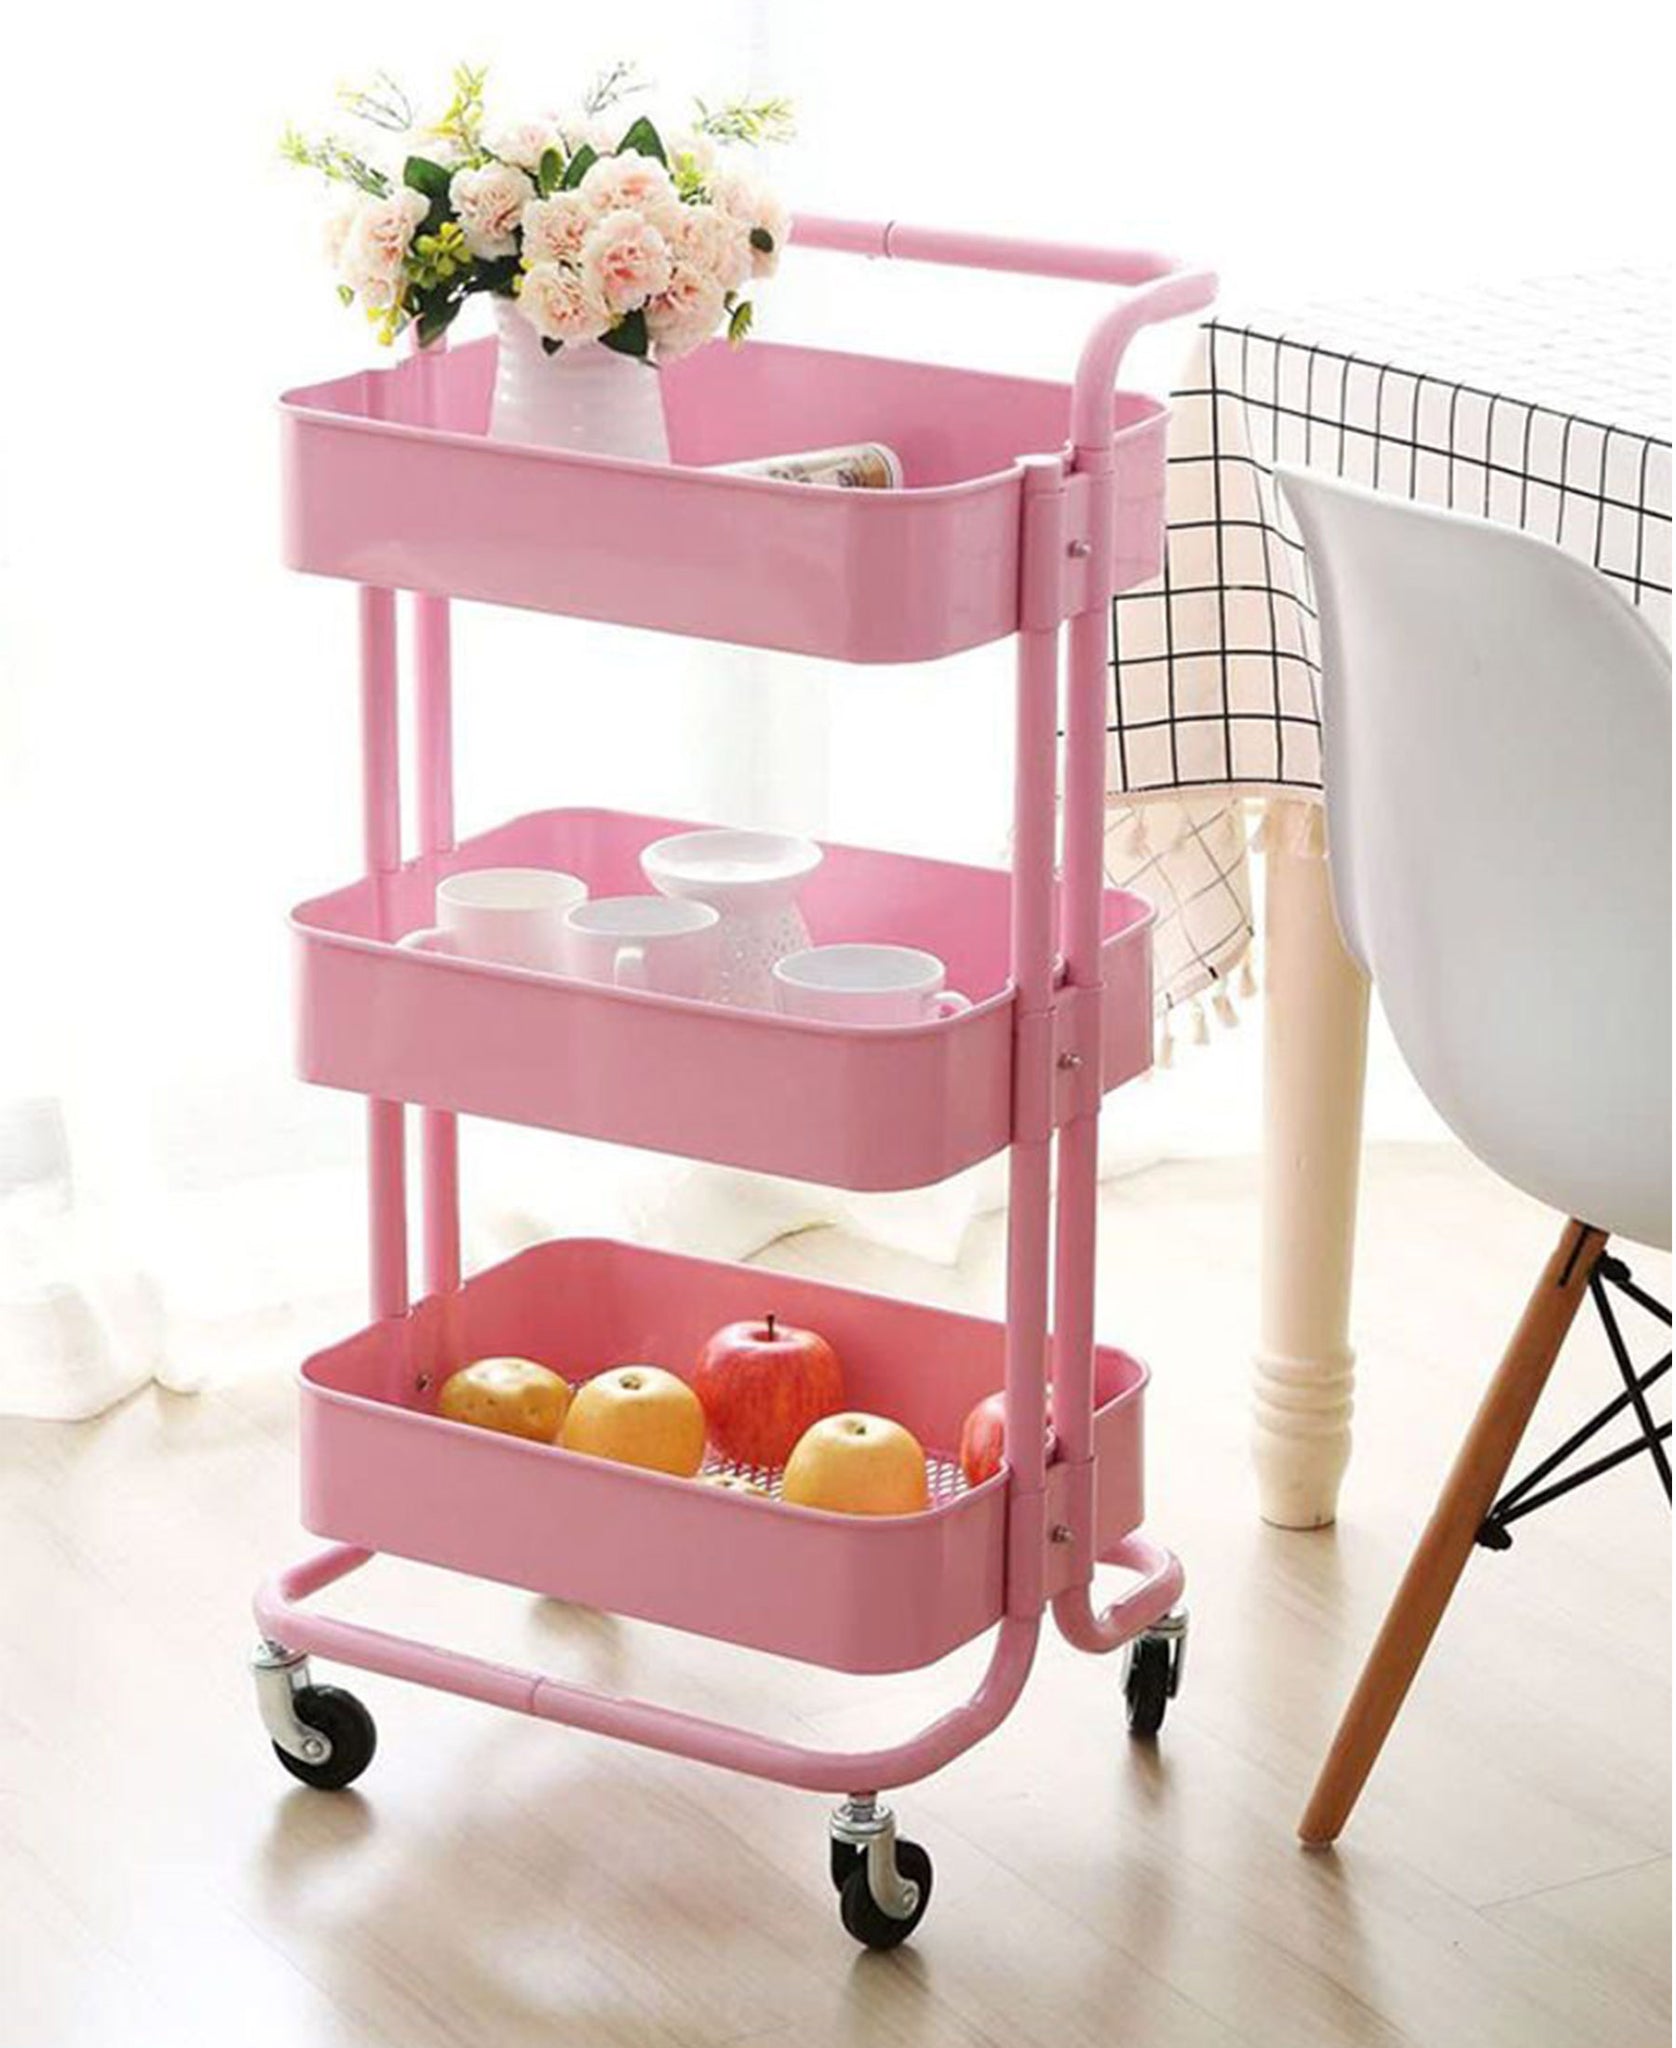 Monaco 3 Tier Kitchen Storage Rack With Wheels - Pink